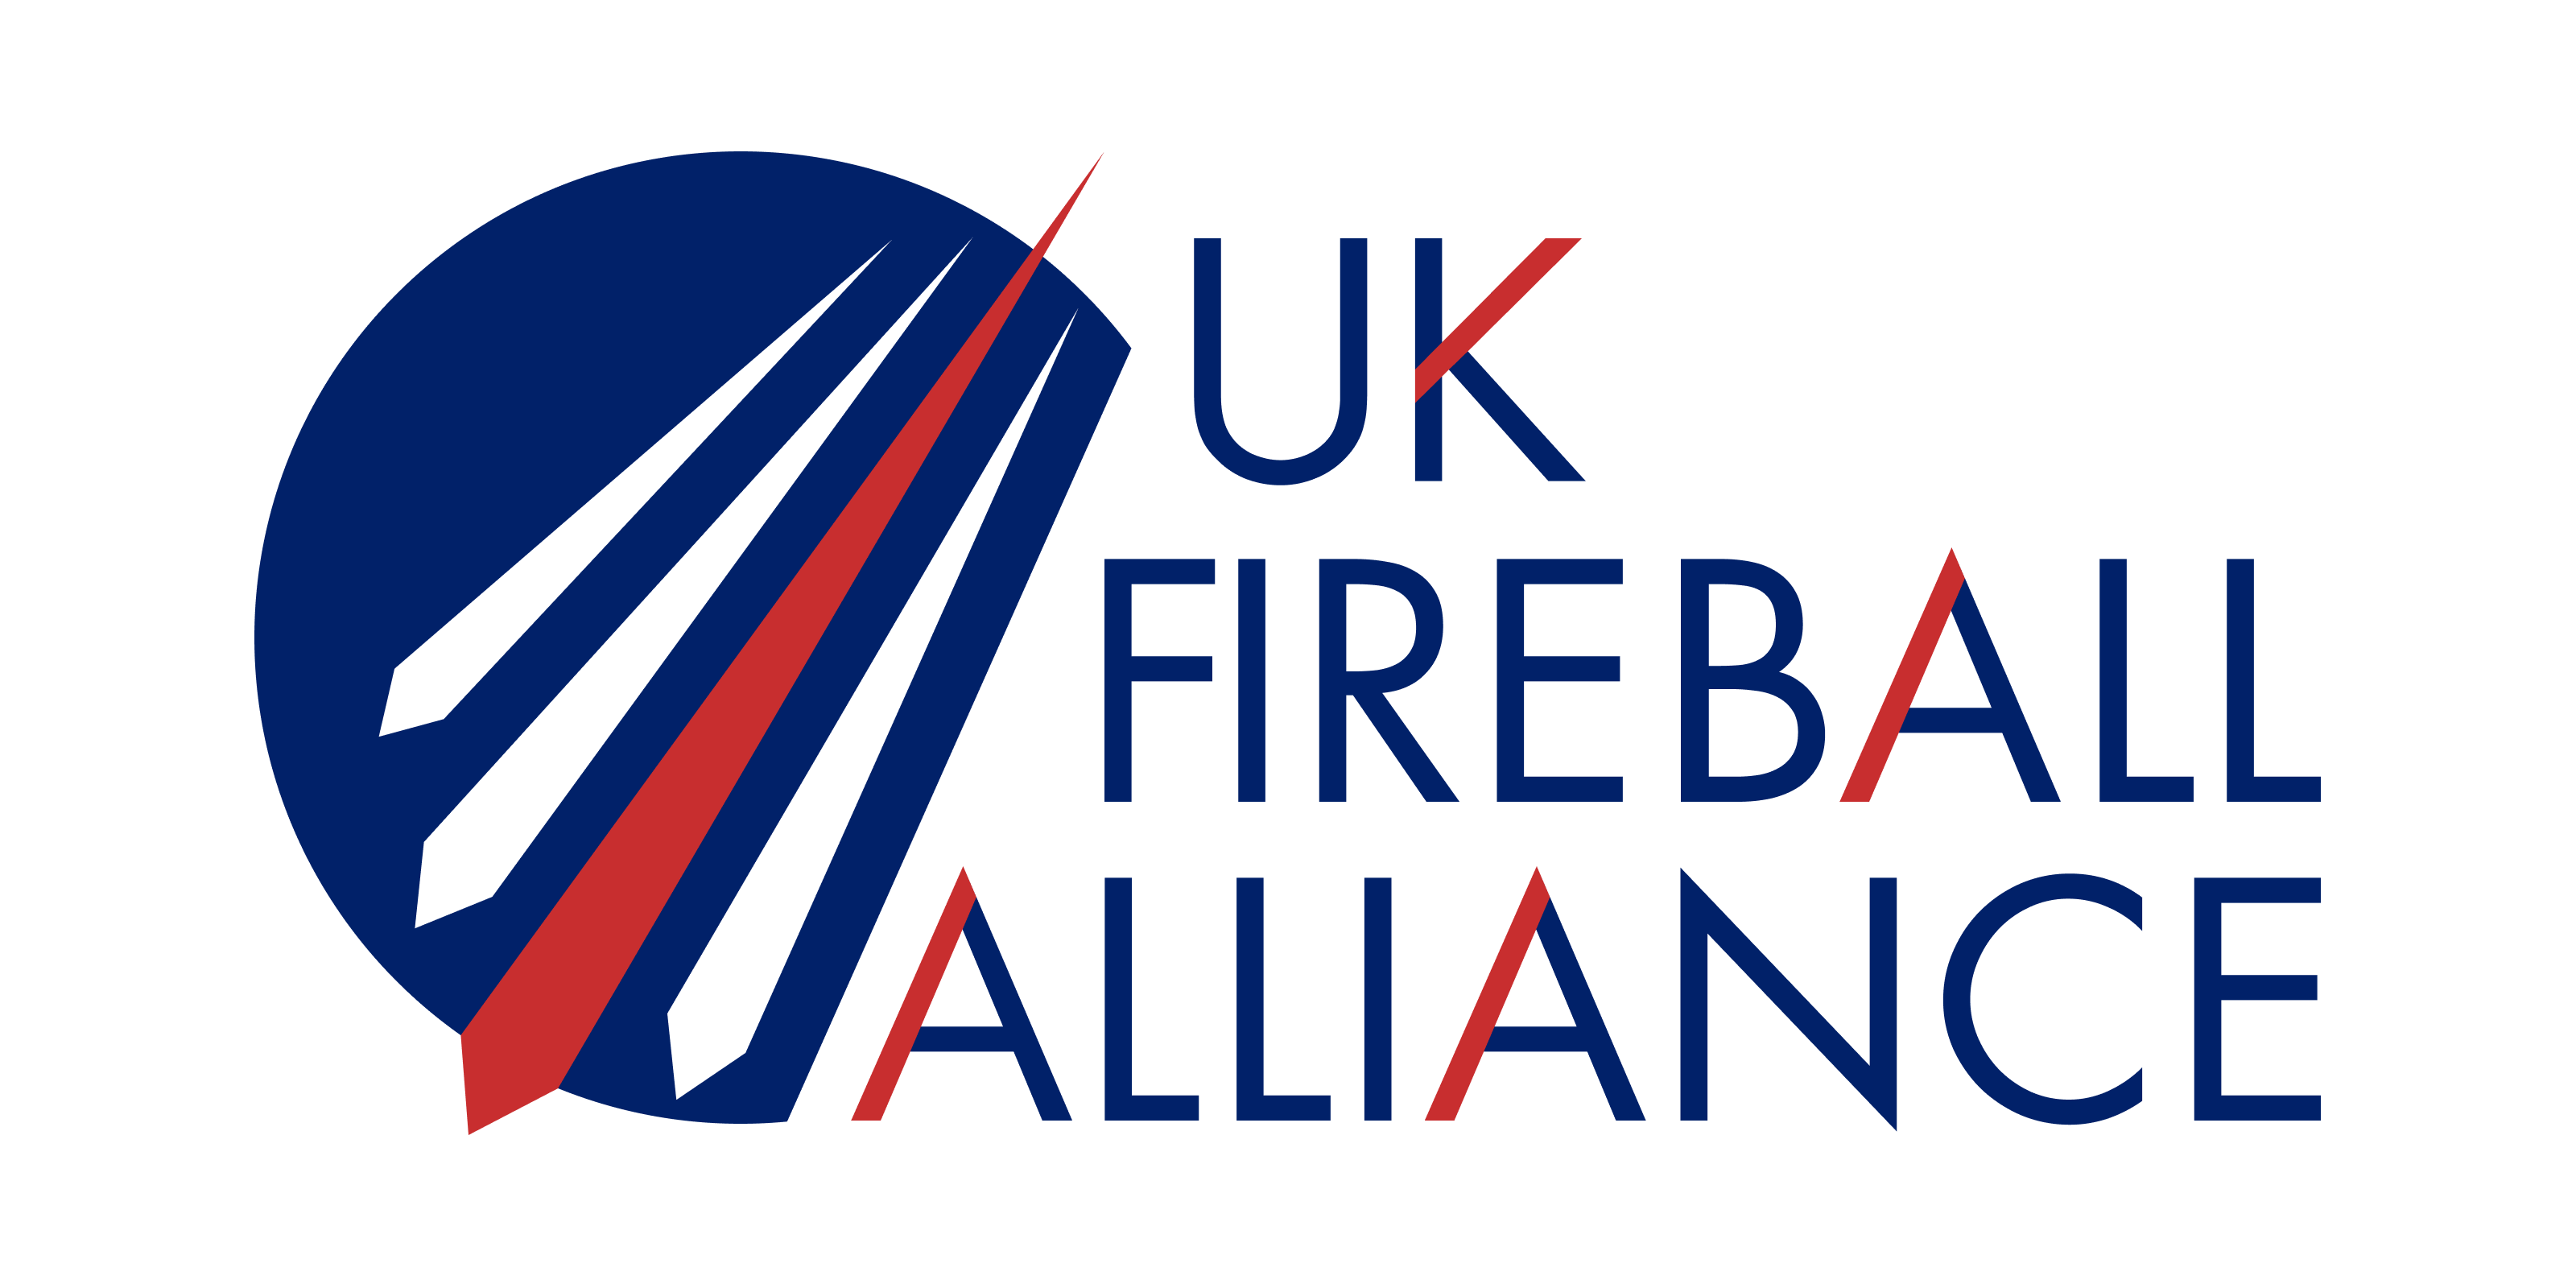 The UK Fireball Alliance